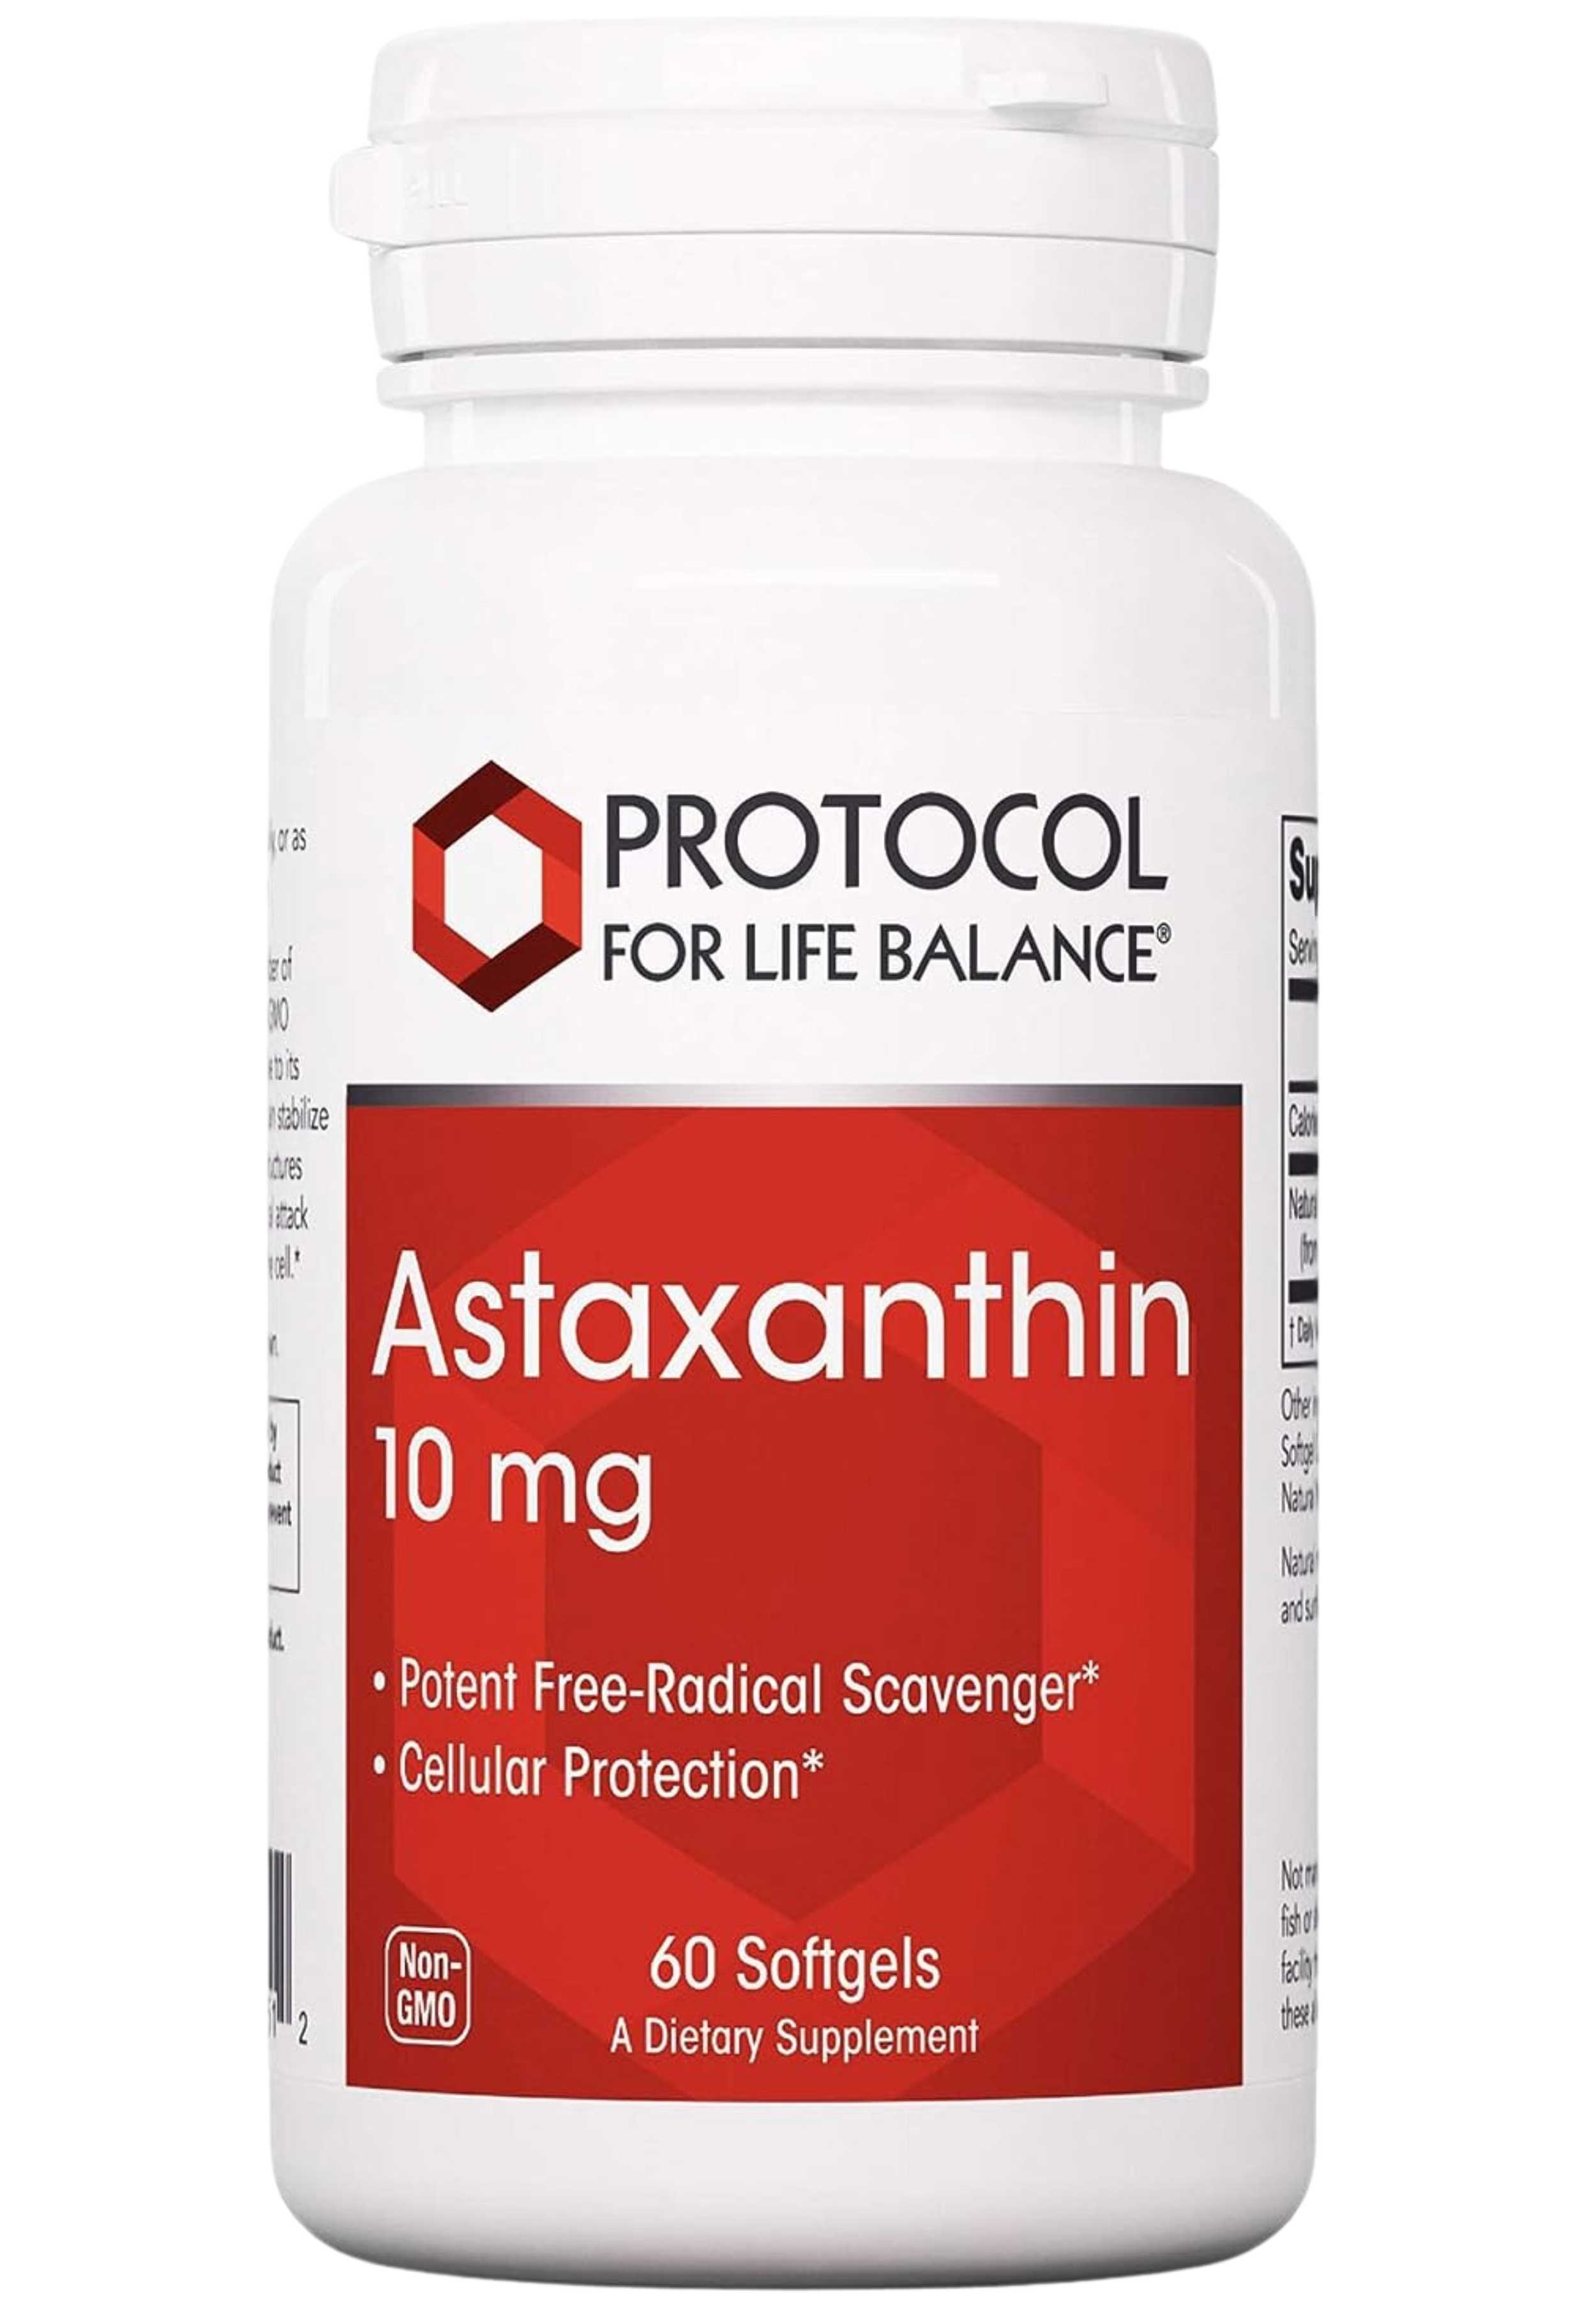 Protocol for Life Balance Astaxanthin 10 mg